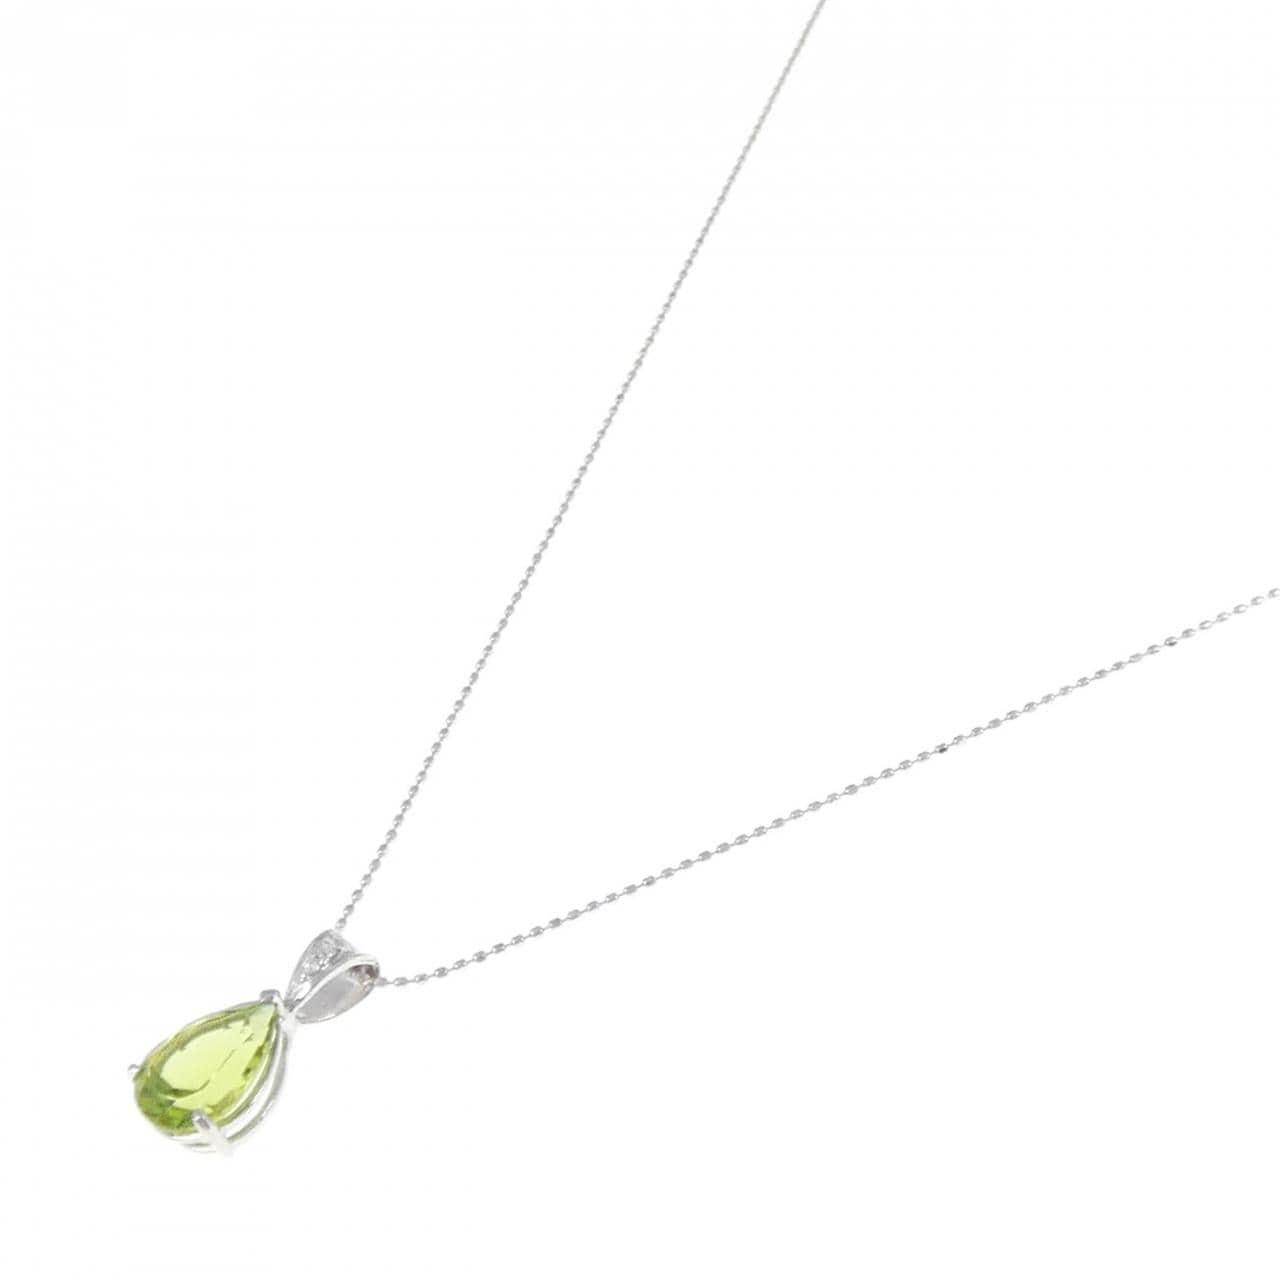 K18WG Peridot necklace 2.65CT